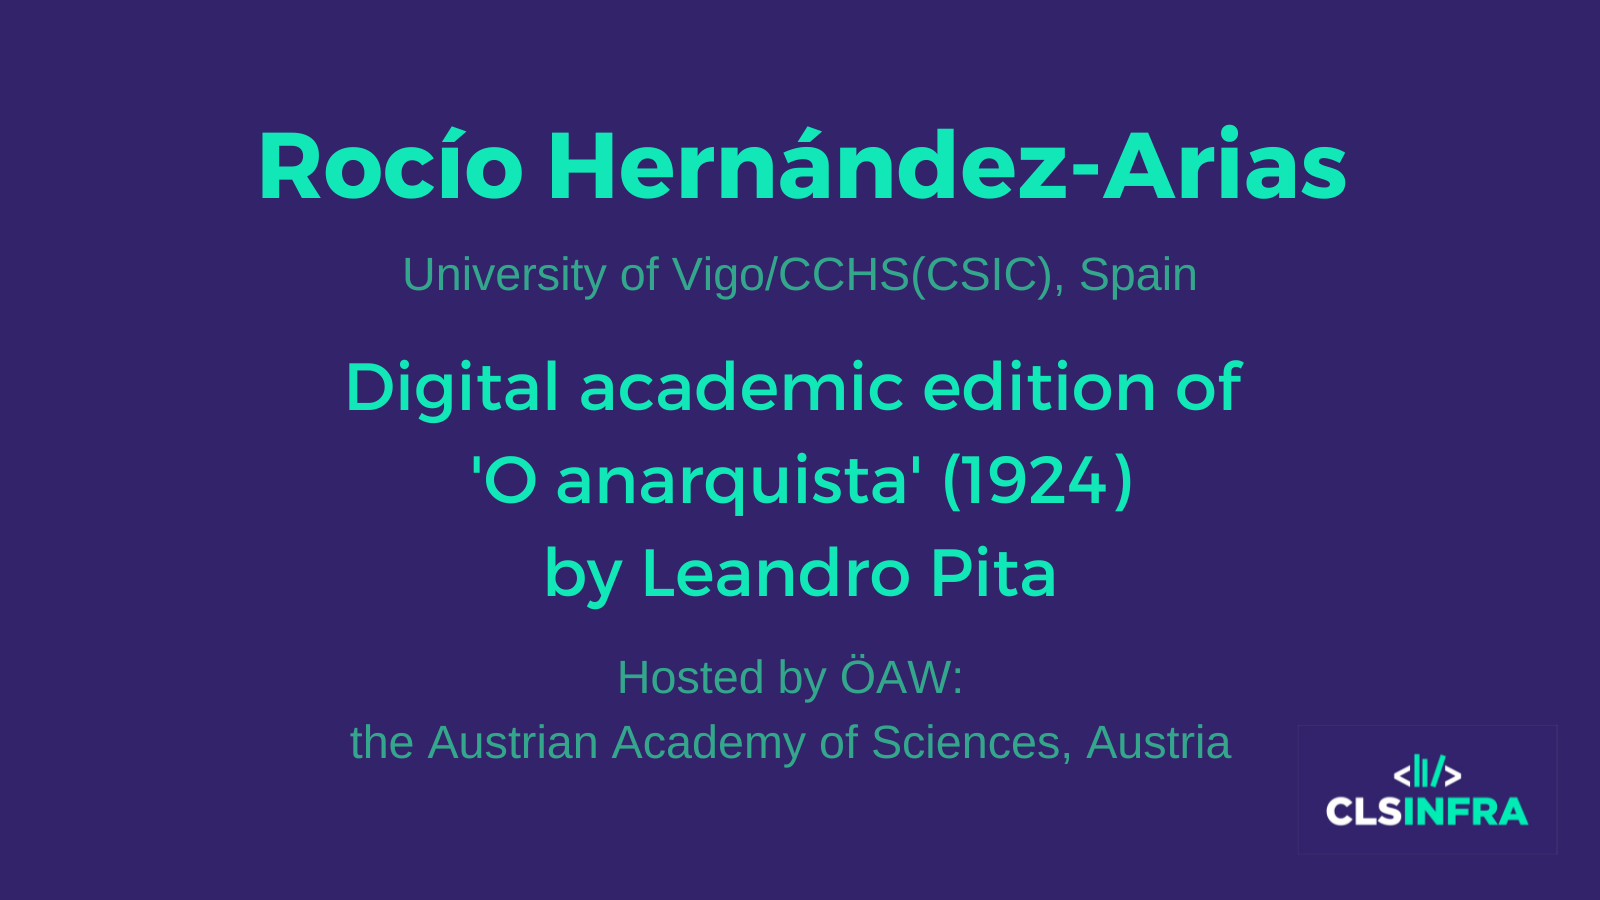 Rocío Hernández-Arias University of Vigo/CCHS(CSIC) Host: Austrian Academy of Sciences Digital Academic Edition of 'O anarquista' (1924), by Leandro Pita